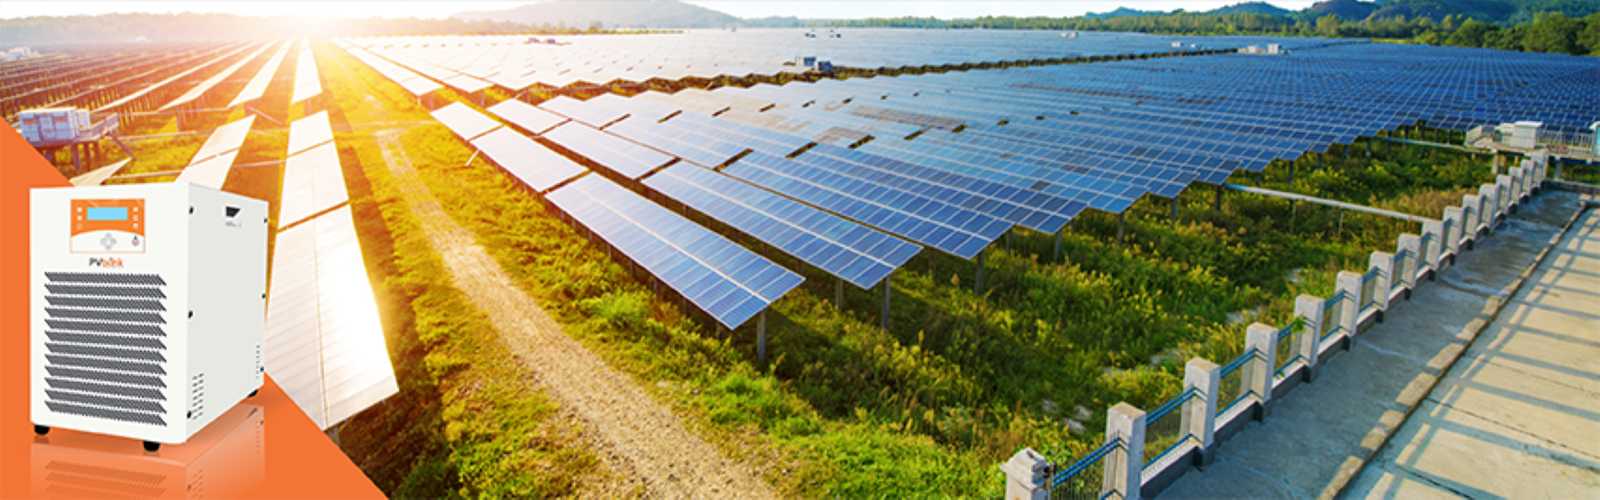 off-grid solar energy systems